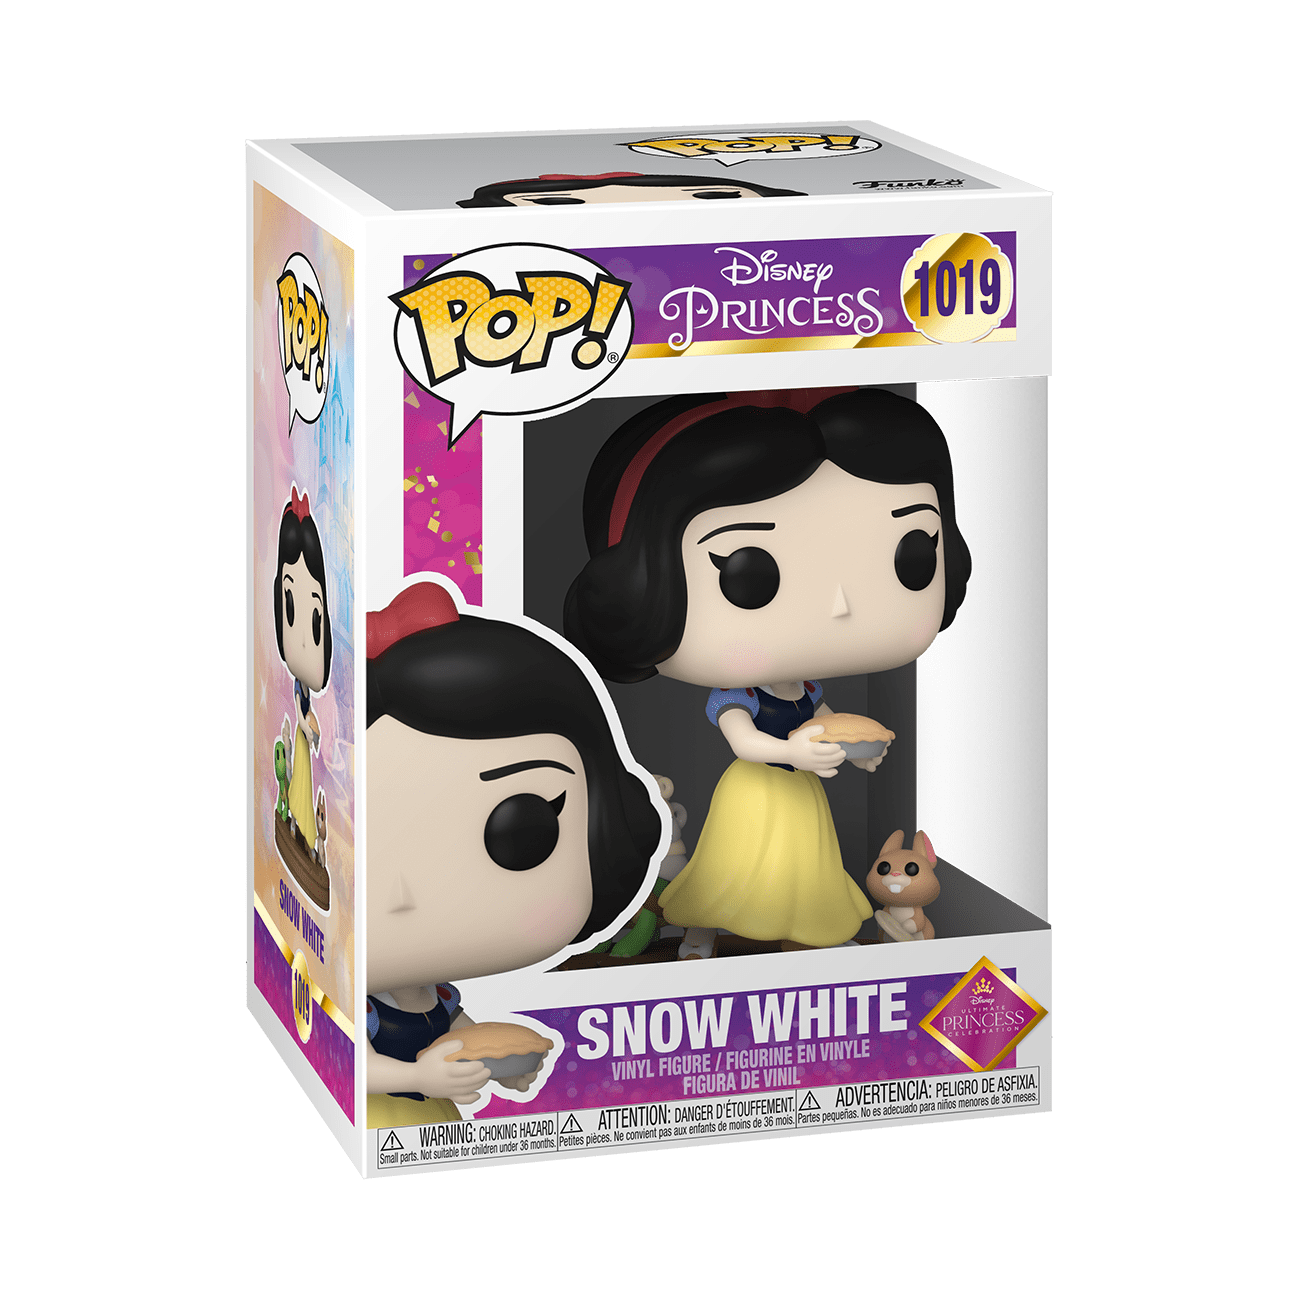 Snow White Ultimate Princess Funko Pop! #1019 - The Pop Central